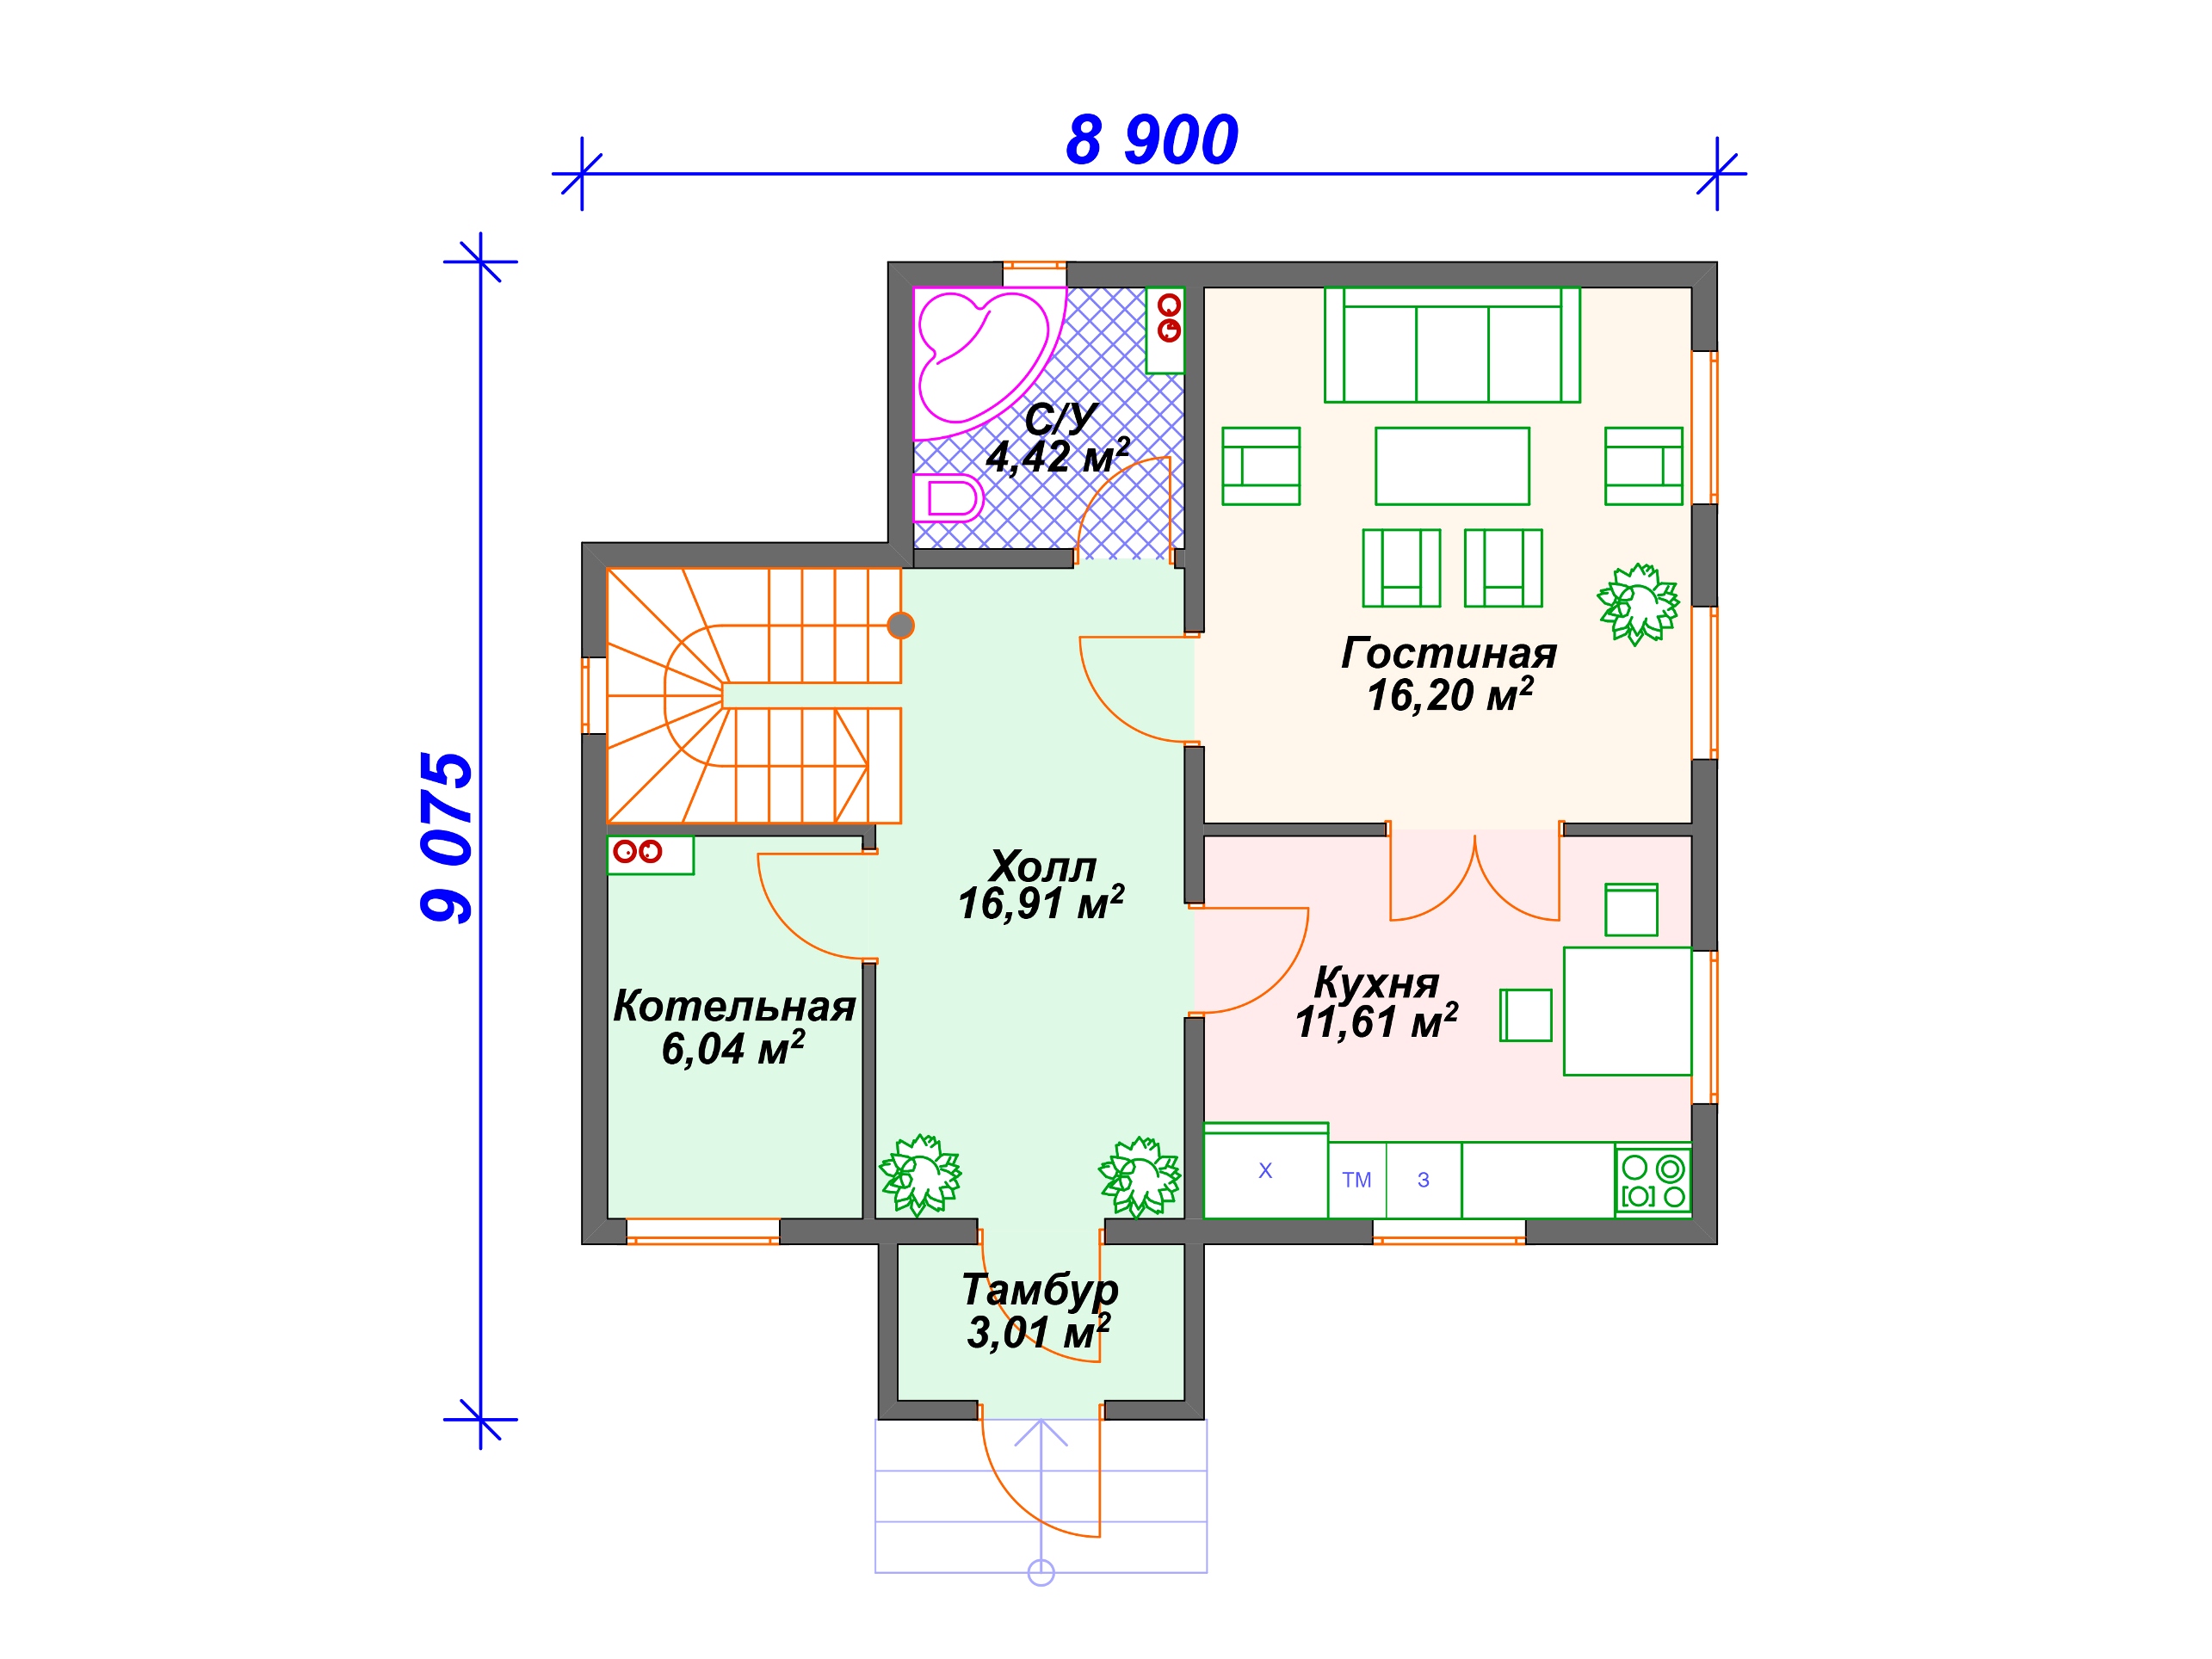 Схема каркасного дома И-008 1 этаж